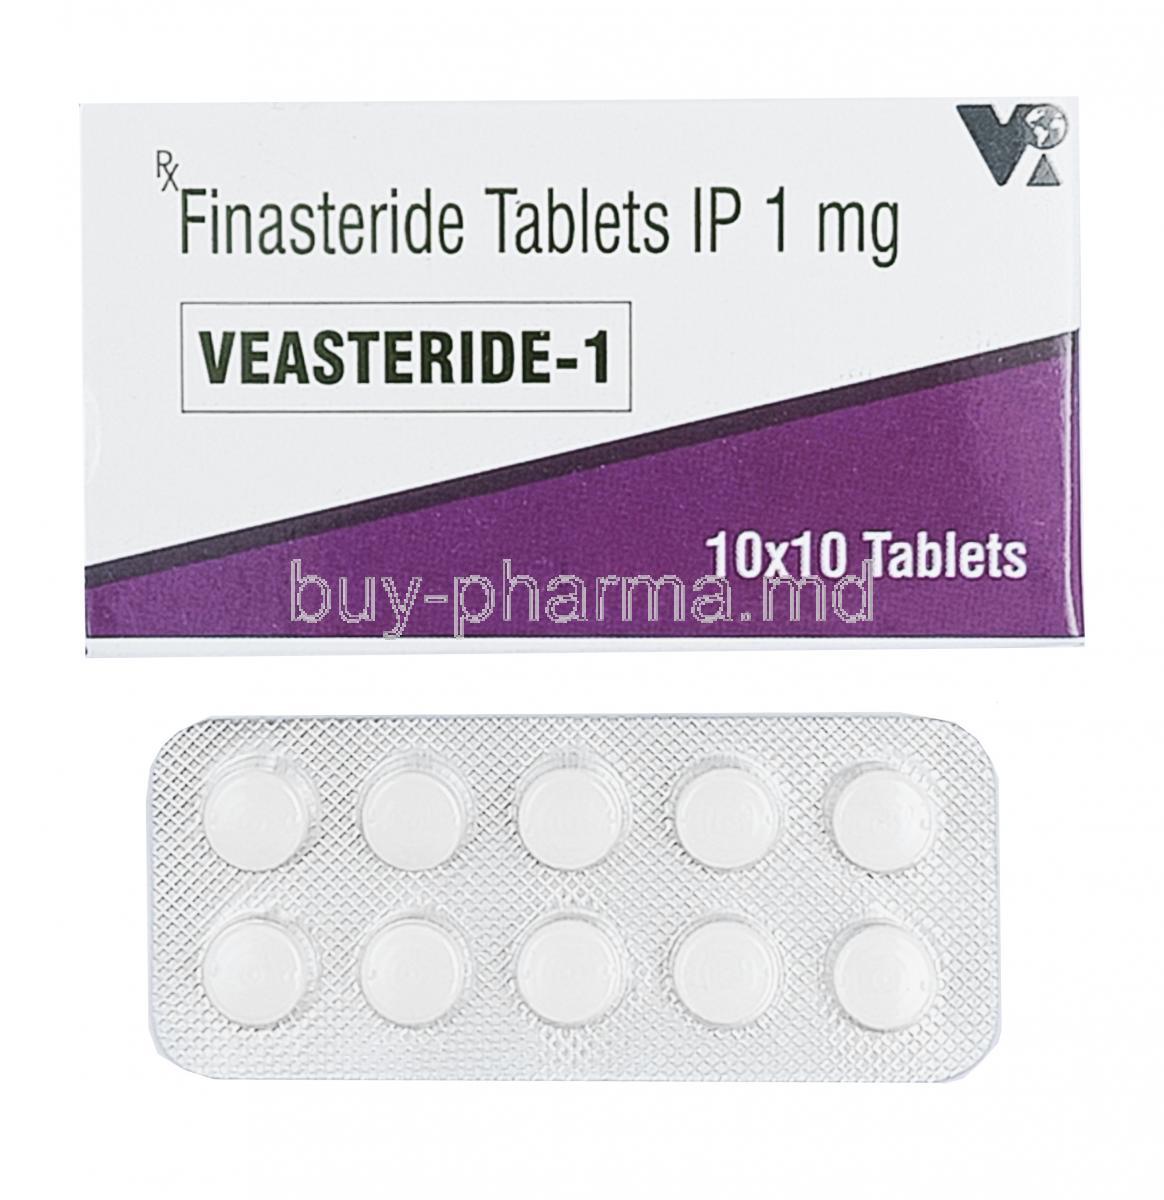 Veasteride, Finasteride 1mg box and tablet